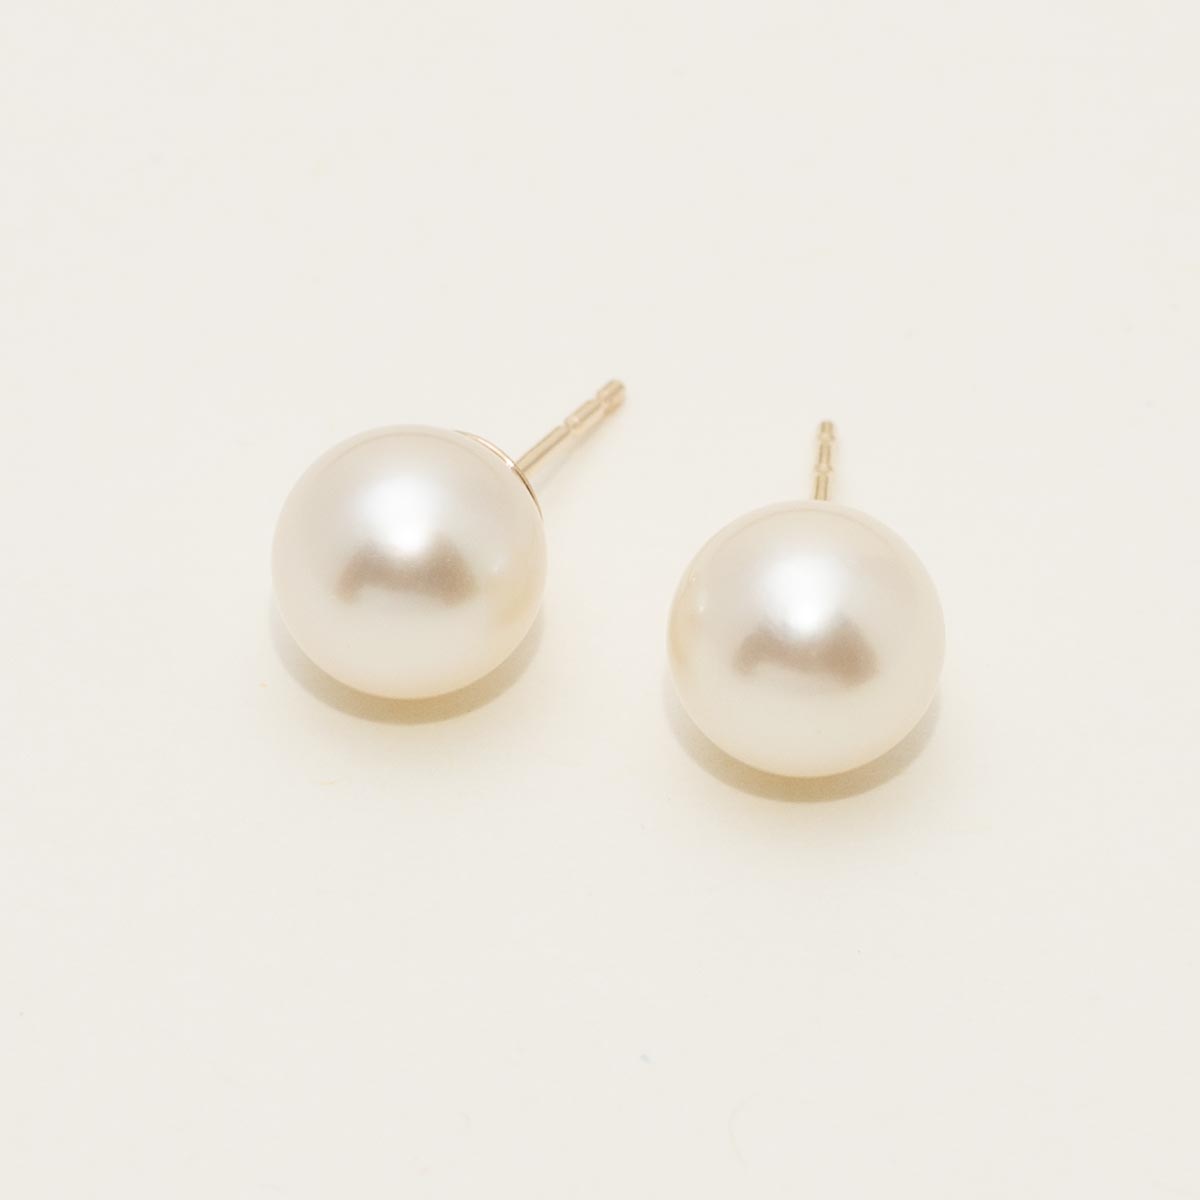 Mastoloni Cultured Akoya Pearl Stud Earrings in 14kt Yellow Gold (7.5-8mm pearls)